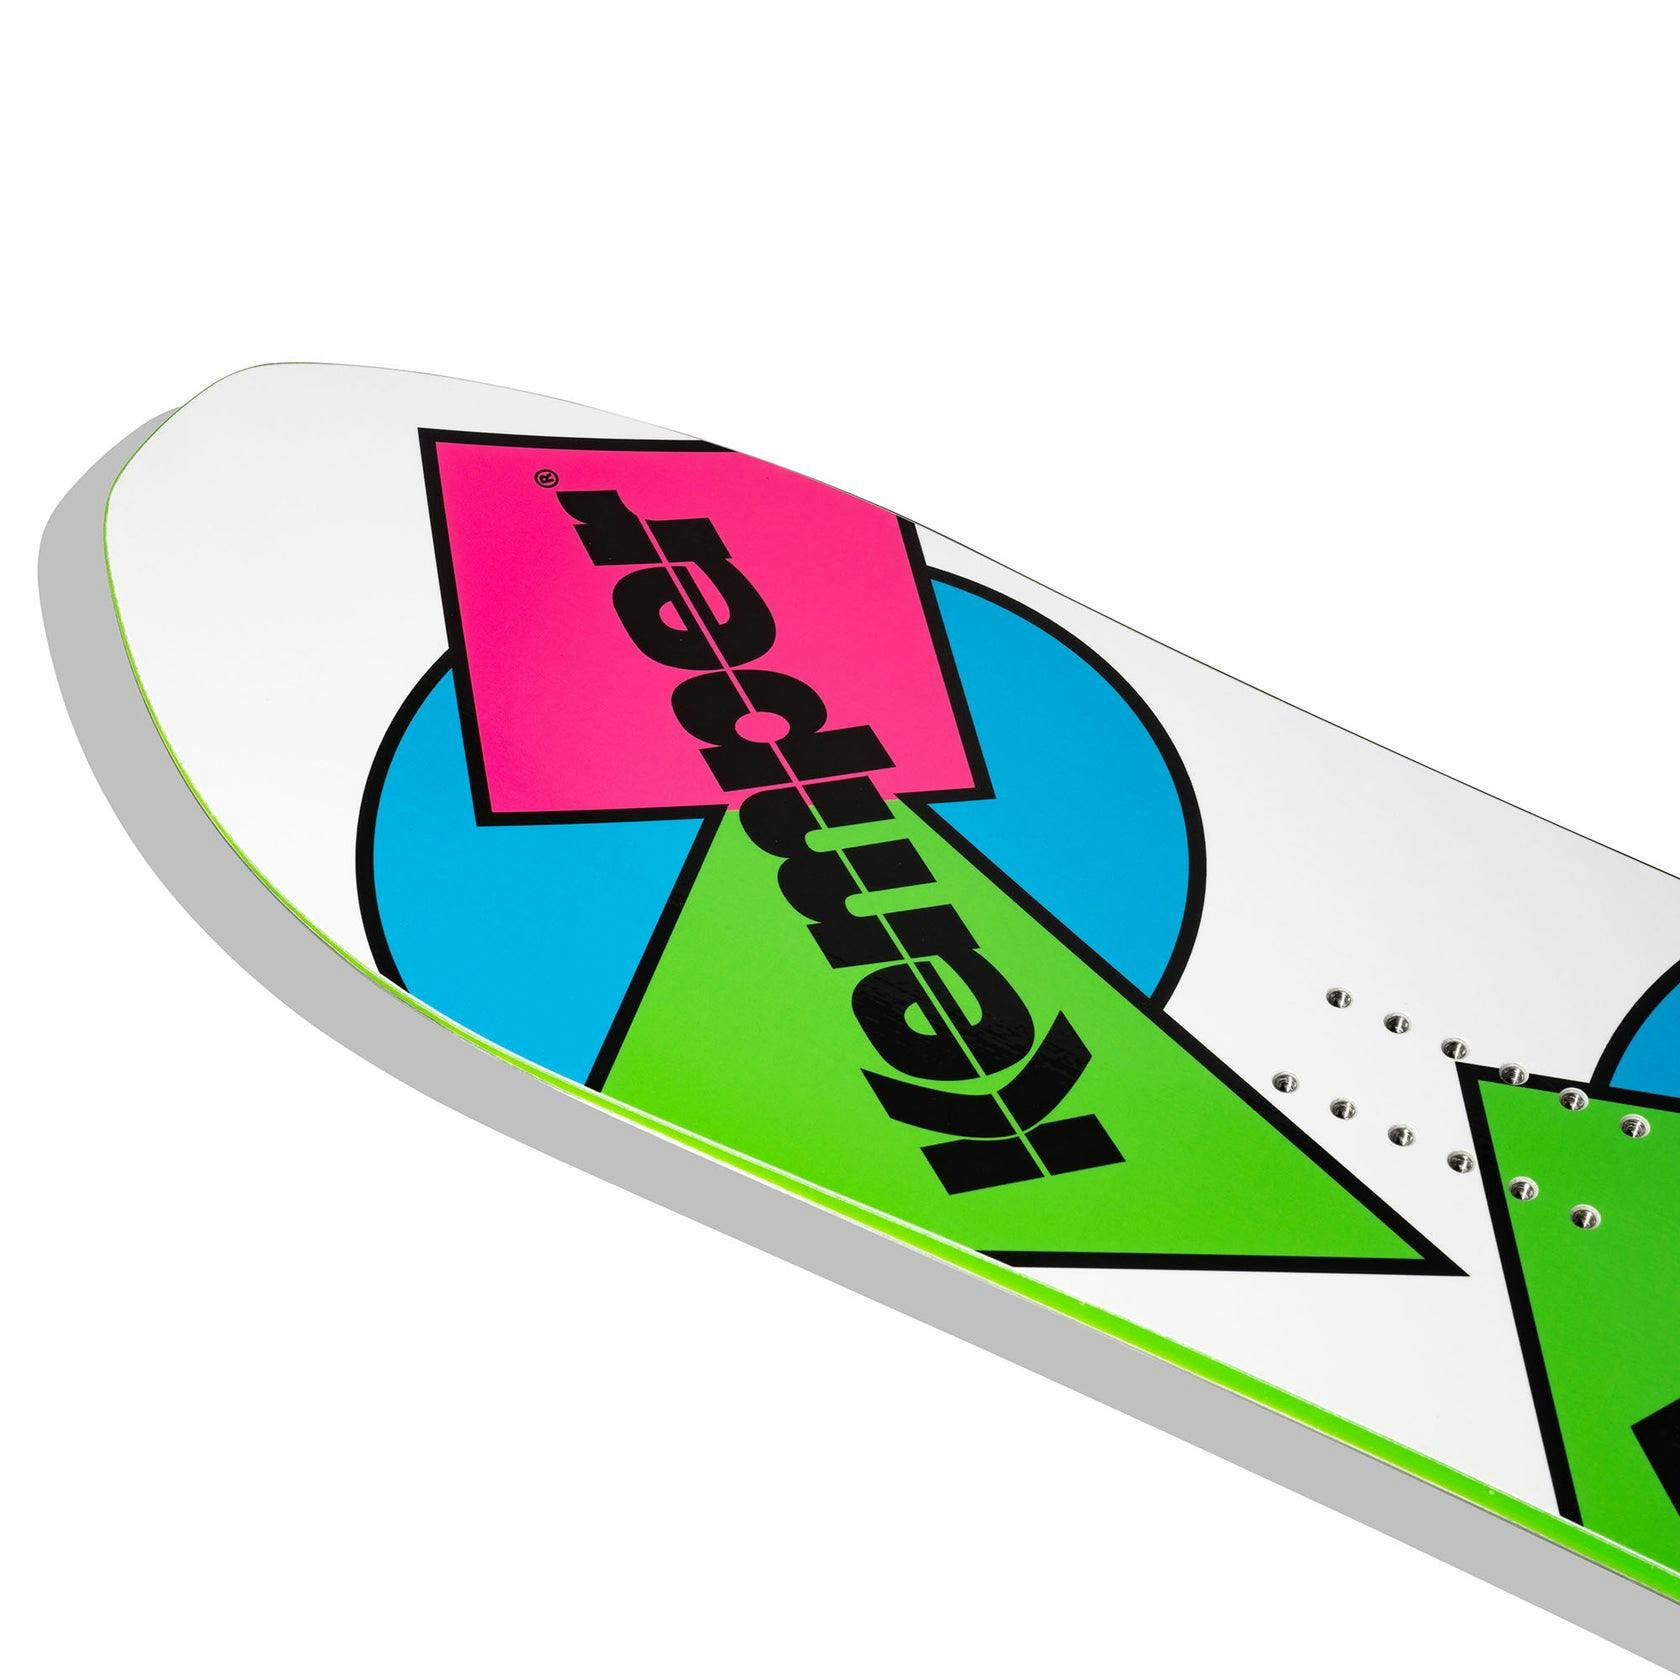 Kemper Freestyle Snowboard 1989/90 · 2023 · 164 cm